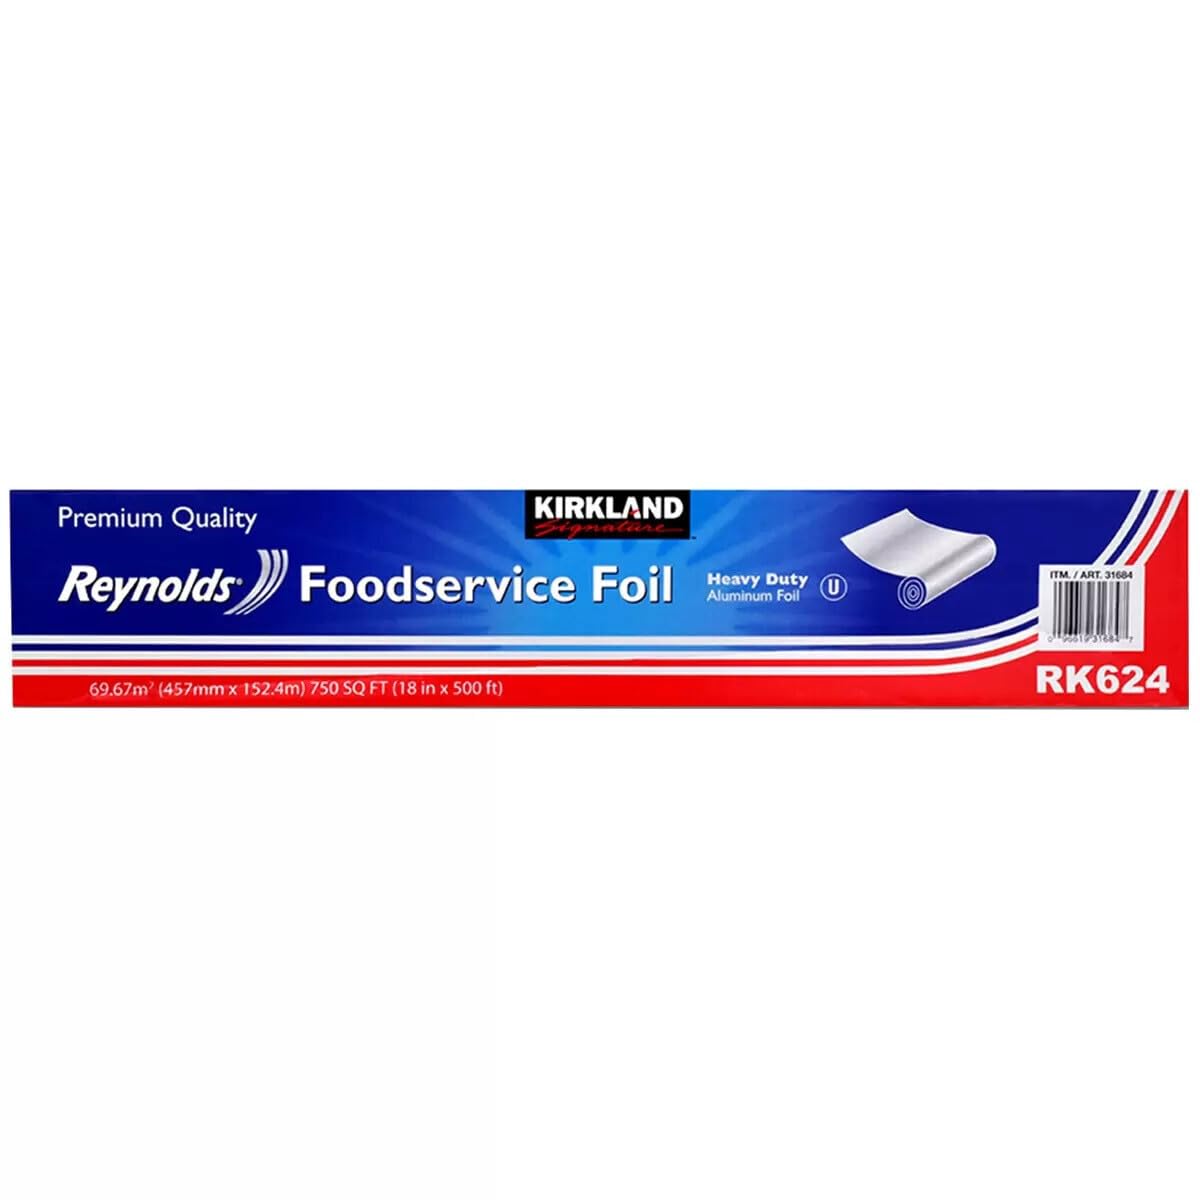 Reynolds Foodservice 18 x 500' Standard Aluminum Foil Roll